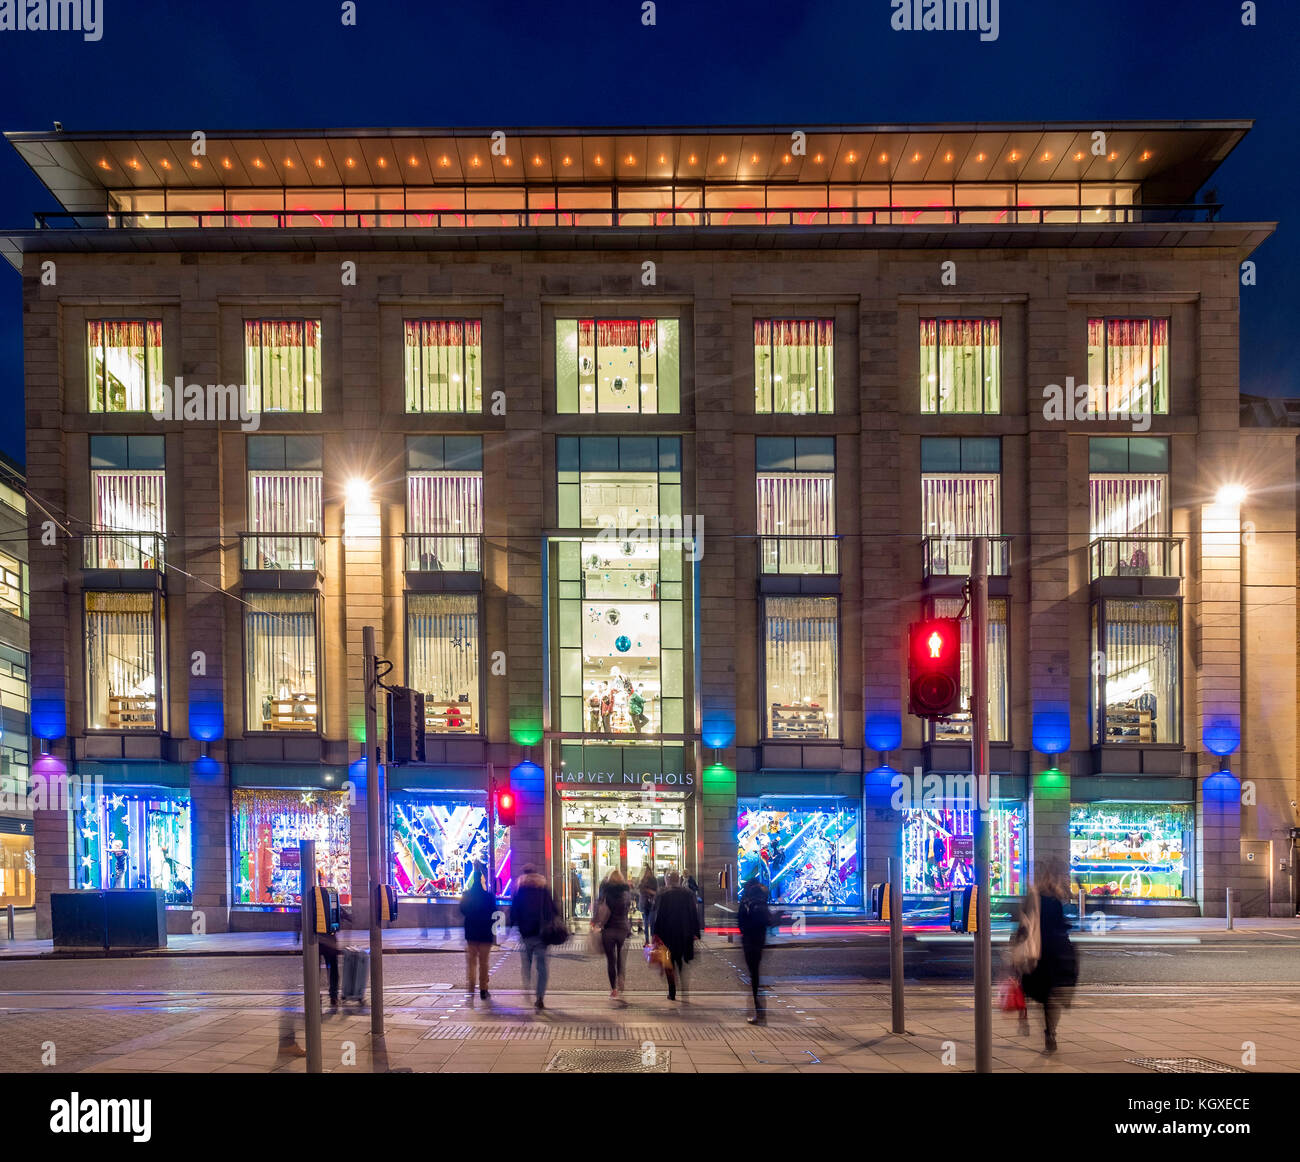 Night view of exterior of Harvey Nichols store in St Andrews Square in Edinburgh, Scotland, United Kingdom. Stock Photo